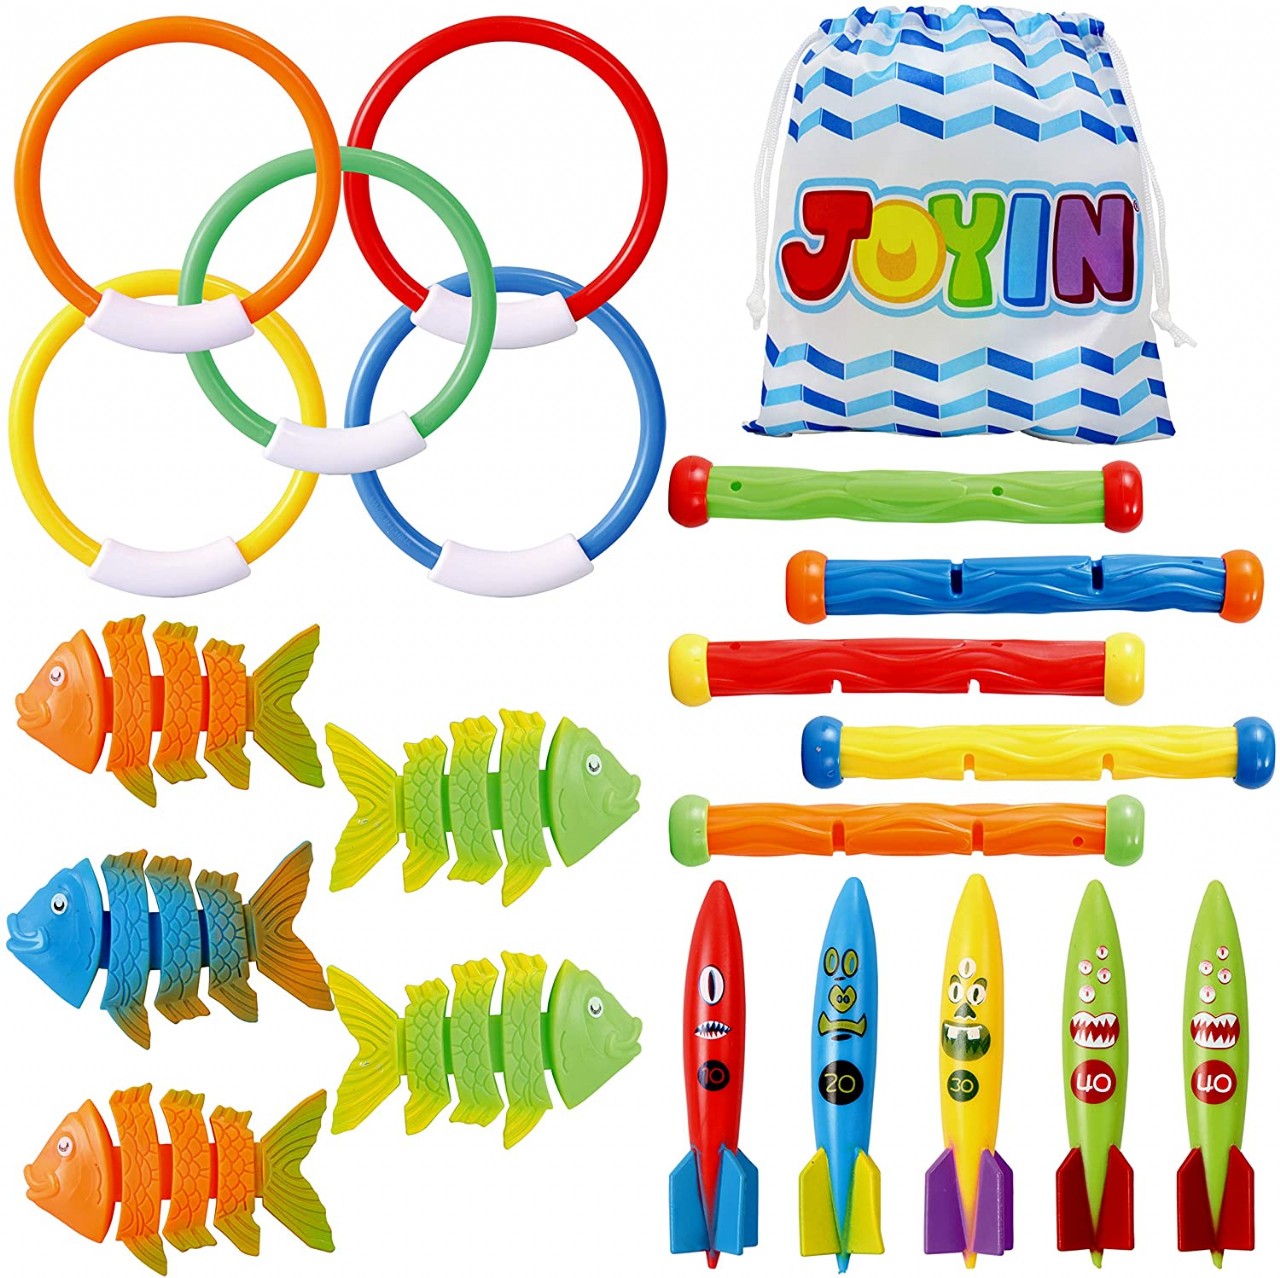 JOYIN 20 Pcs Diving Pool Toys Set with Bonus Storage Bag Includes 5 Diving Sticks, 5 Diving Rings